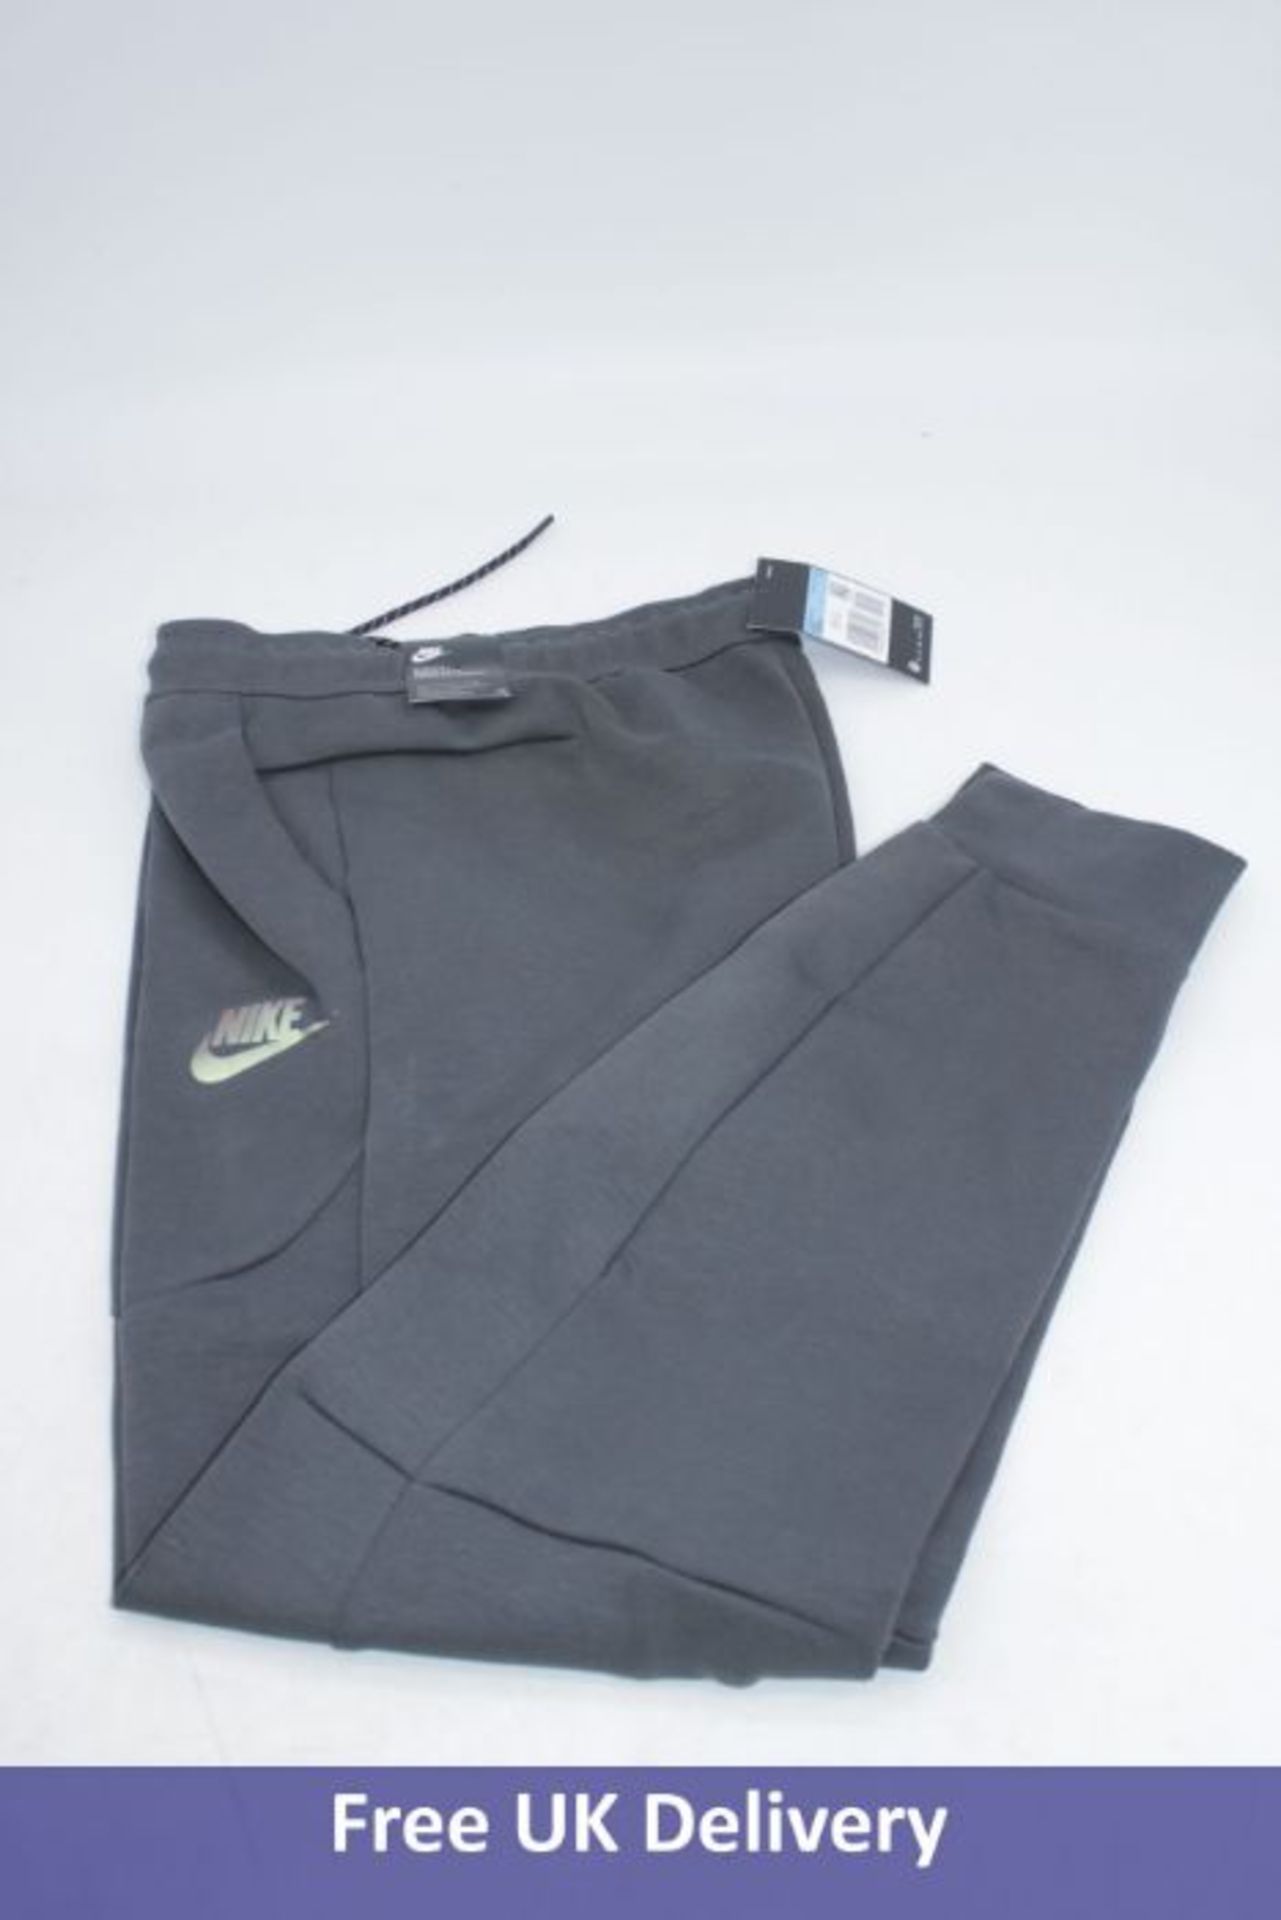 Two items of Nike Men's Clothing to include 1x Jordan Paris Saint-Germain Fleece Joggers, Black, M a - Image 2 of 2